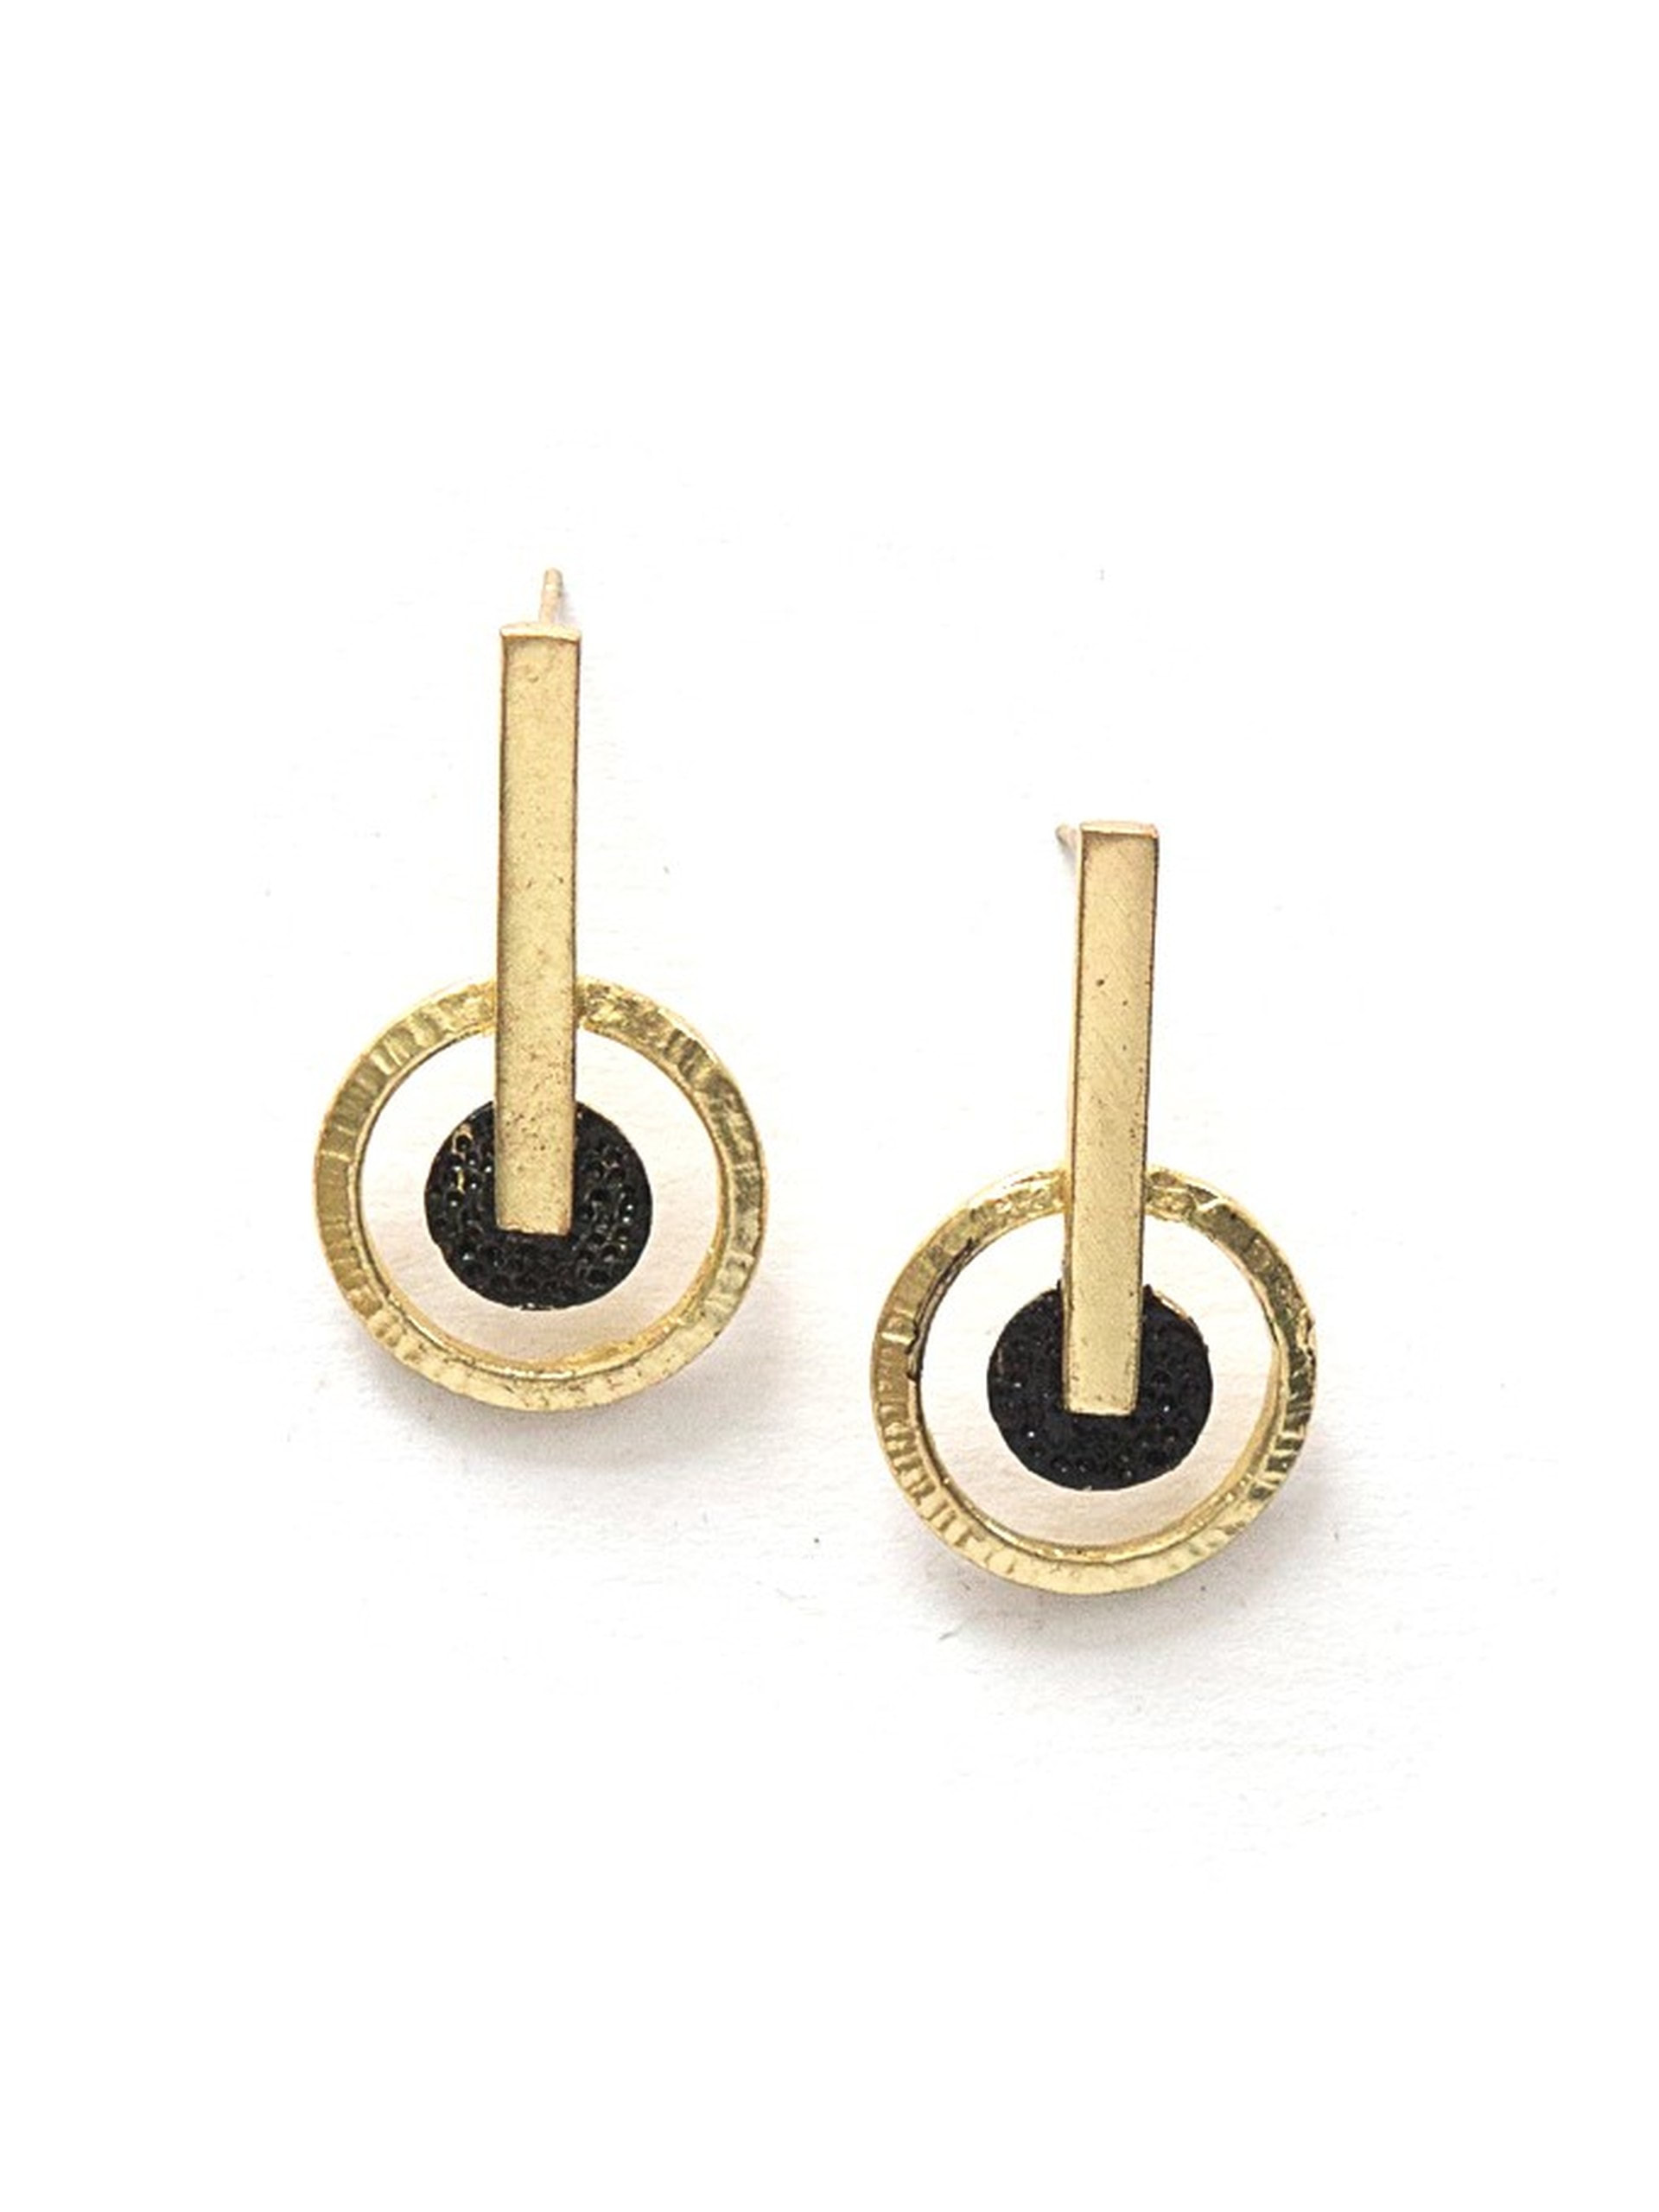 Raw Brass Leaf Figure C Earring Post 26.2x13.16x1.52mm Steel Stud Brass C Leaf Earring Stud Jewelry Supplies PP3083